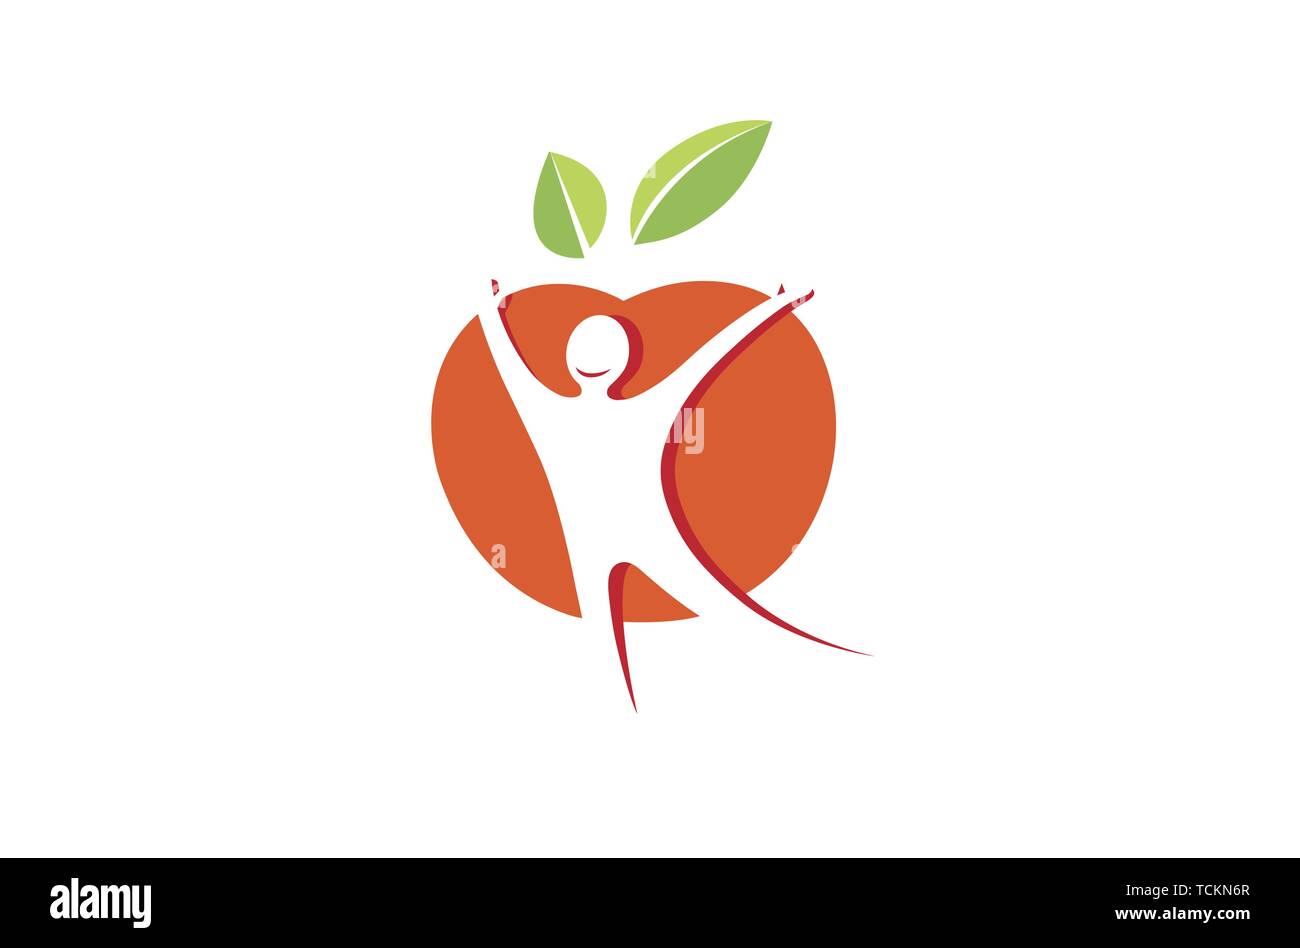 Creative Red Apple Healthy Spiritual Body Logo Design Illustration Stock Vector